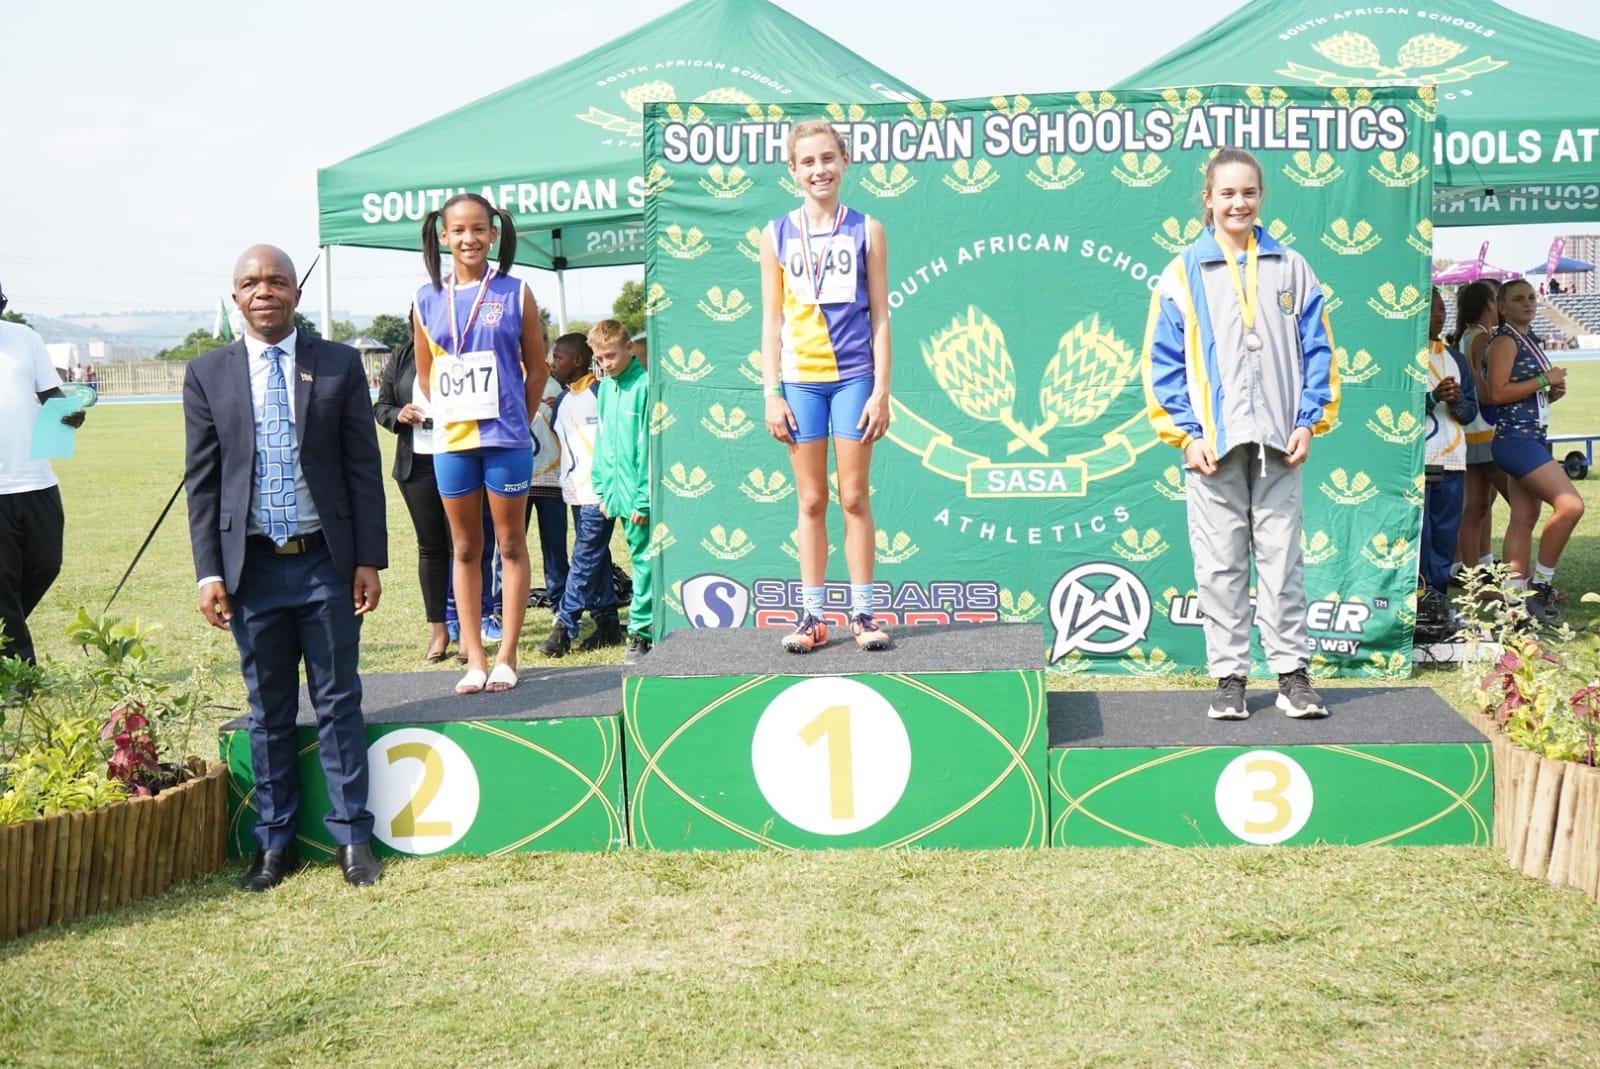 Day 2 - South African Schools Athletics (SASA) 